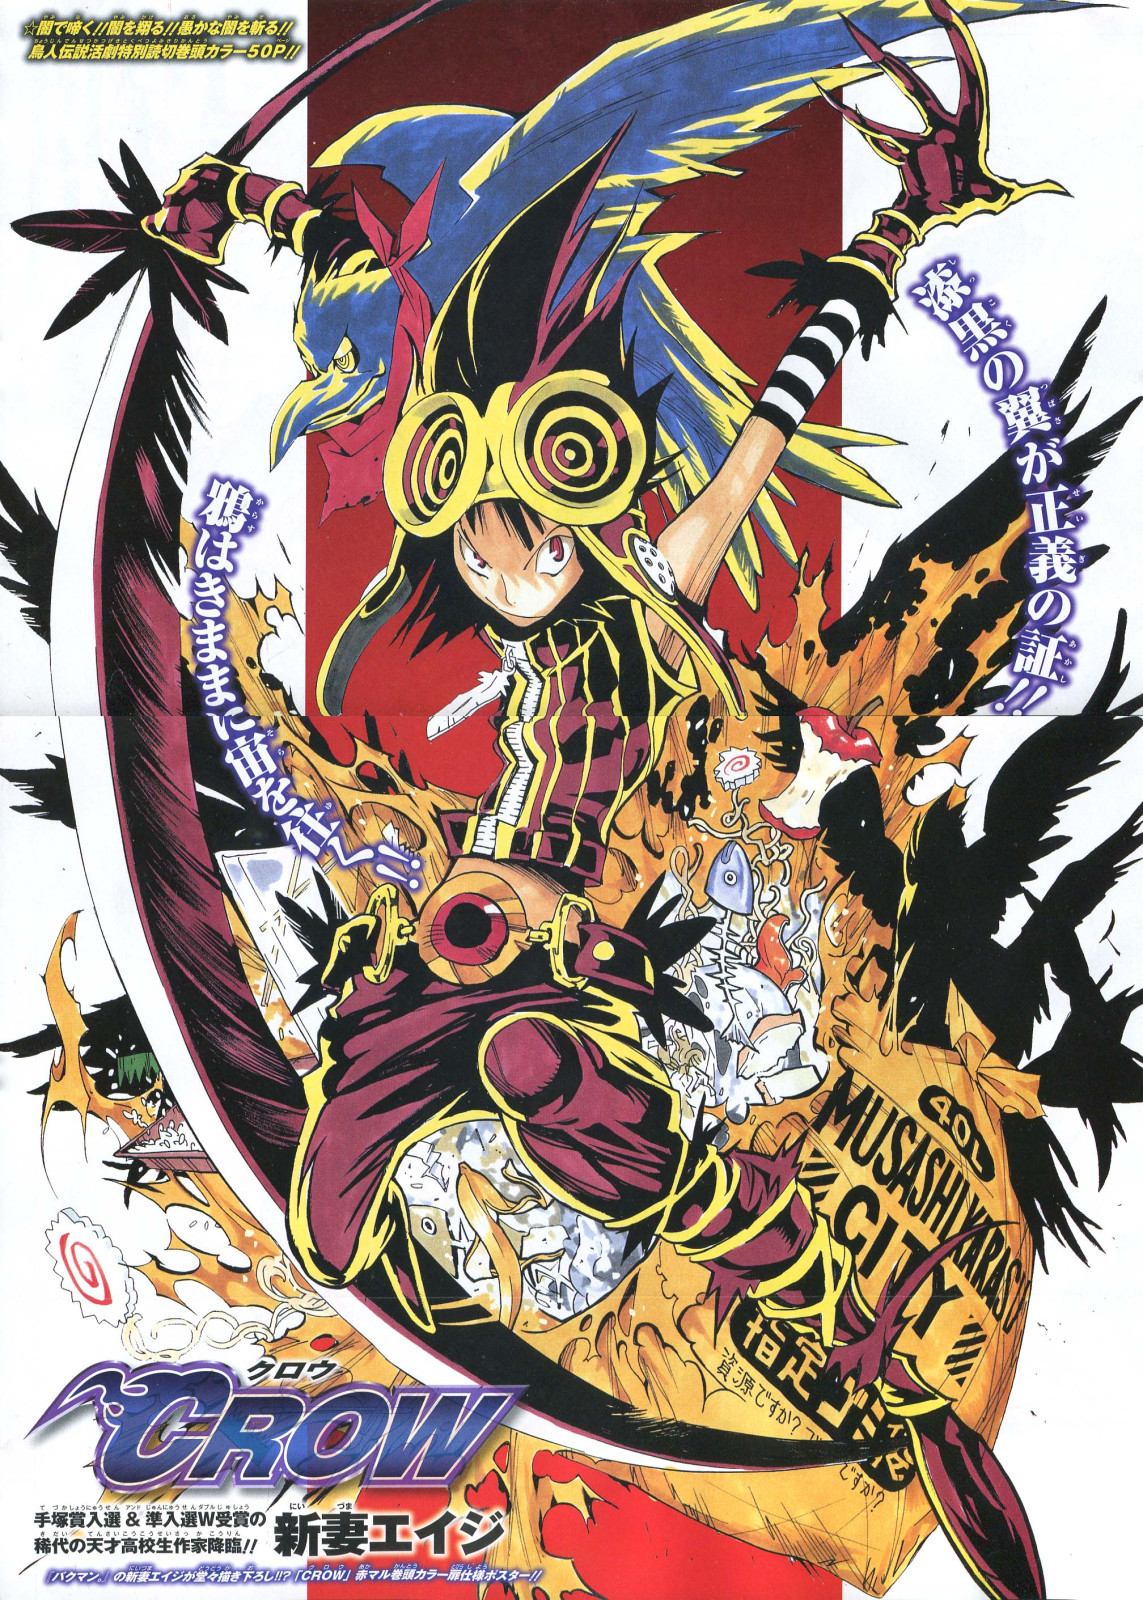 CROWS illustration art book #1 / TAKAHASHI HIROSHI, Anime, Manga | eBay